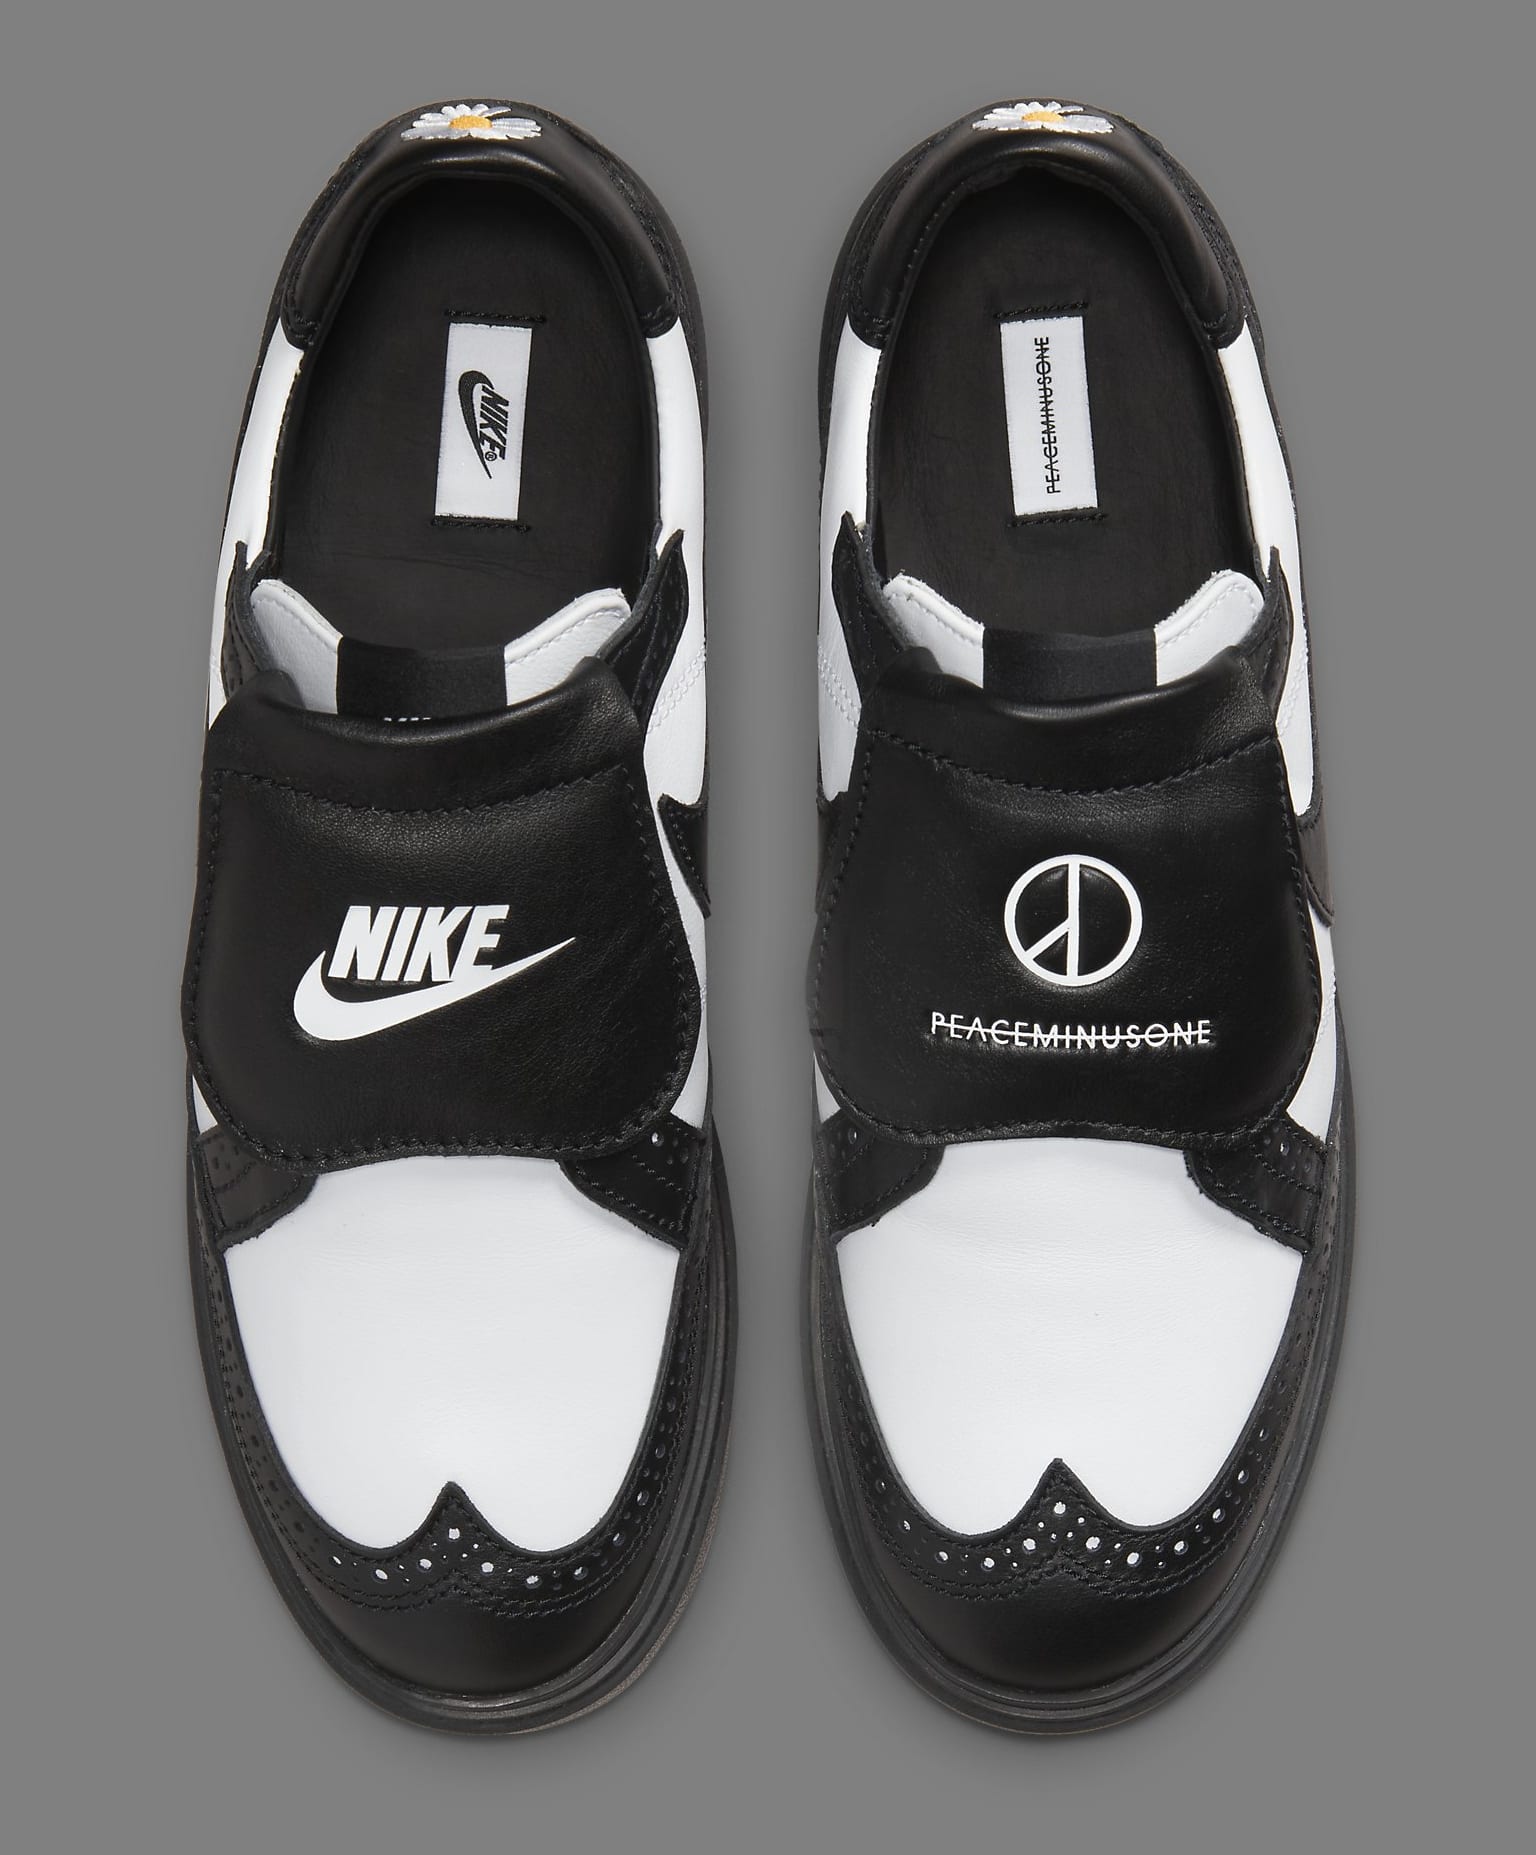 Peaceminusone x Nike Kwondo 1 'Black/White' DH2482 101 Top